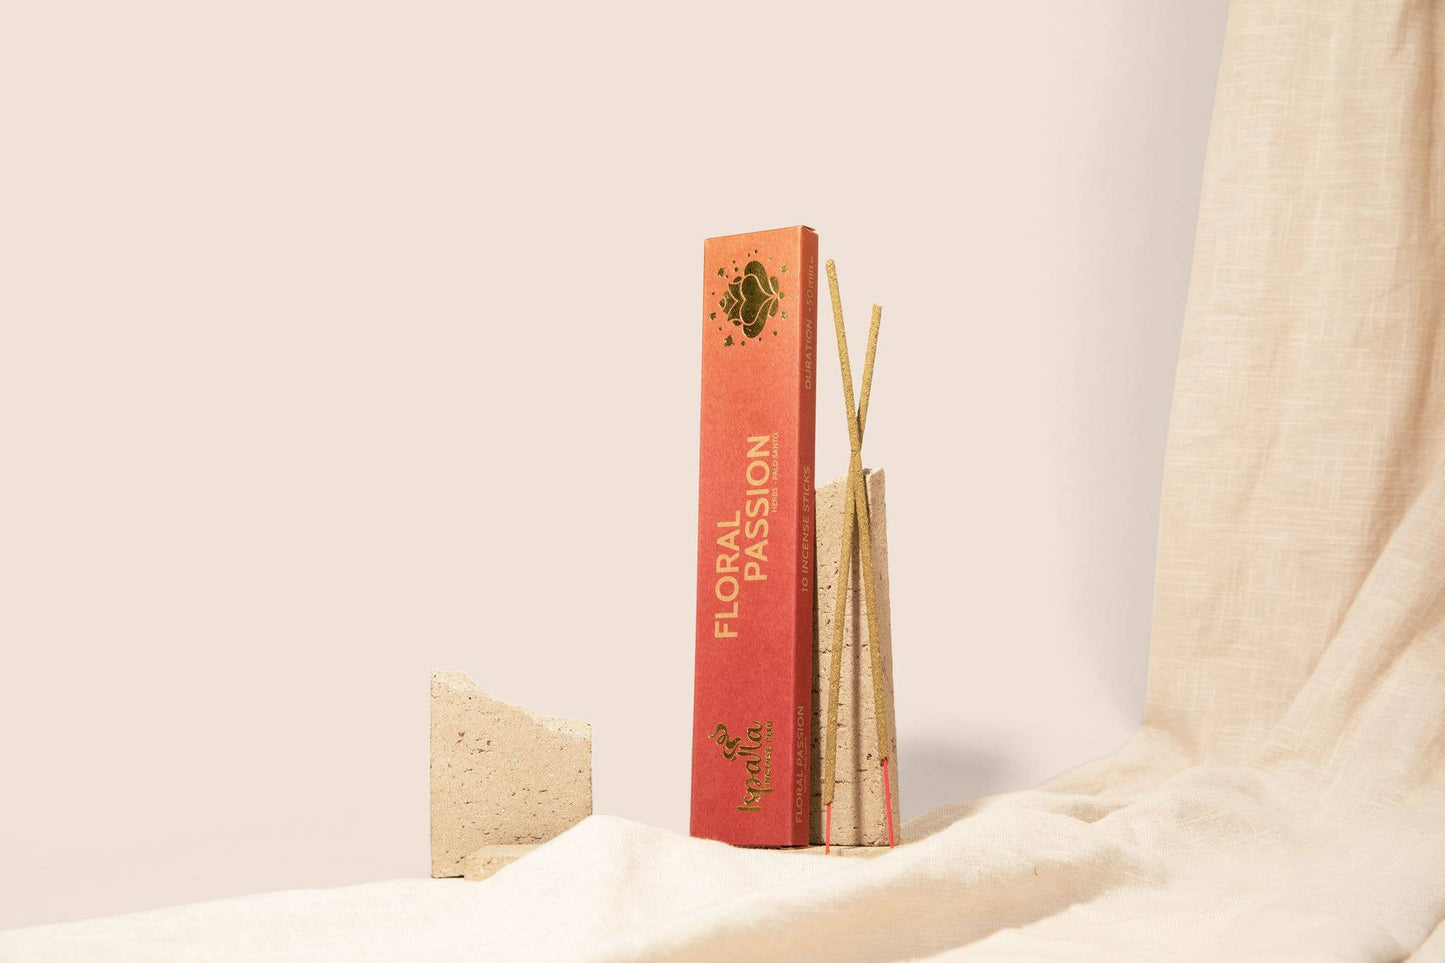 Floral Passion - Incense Sticksi